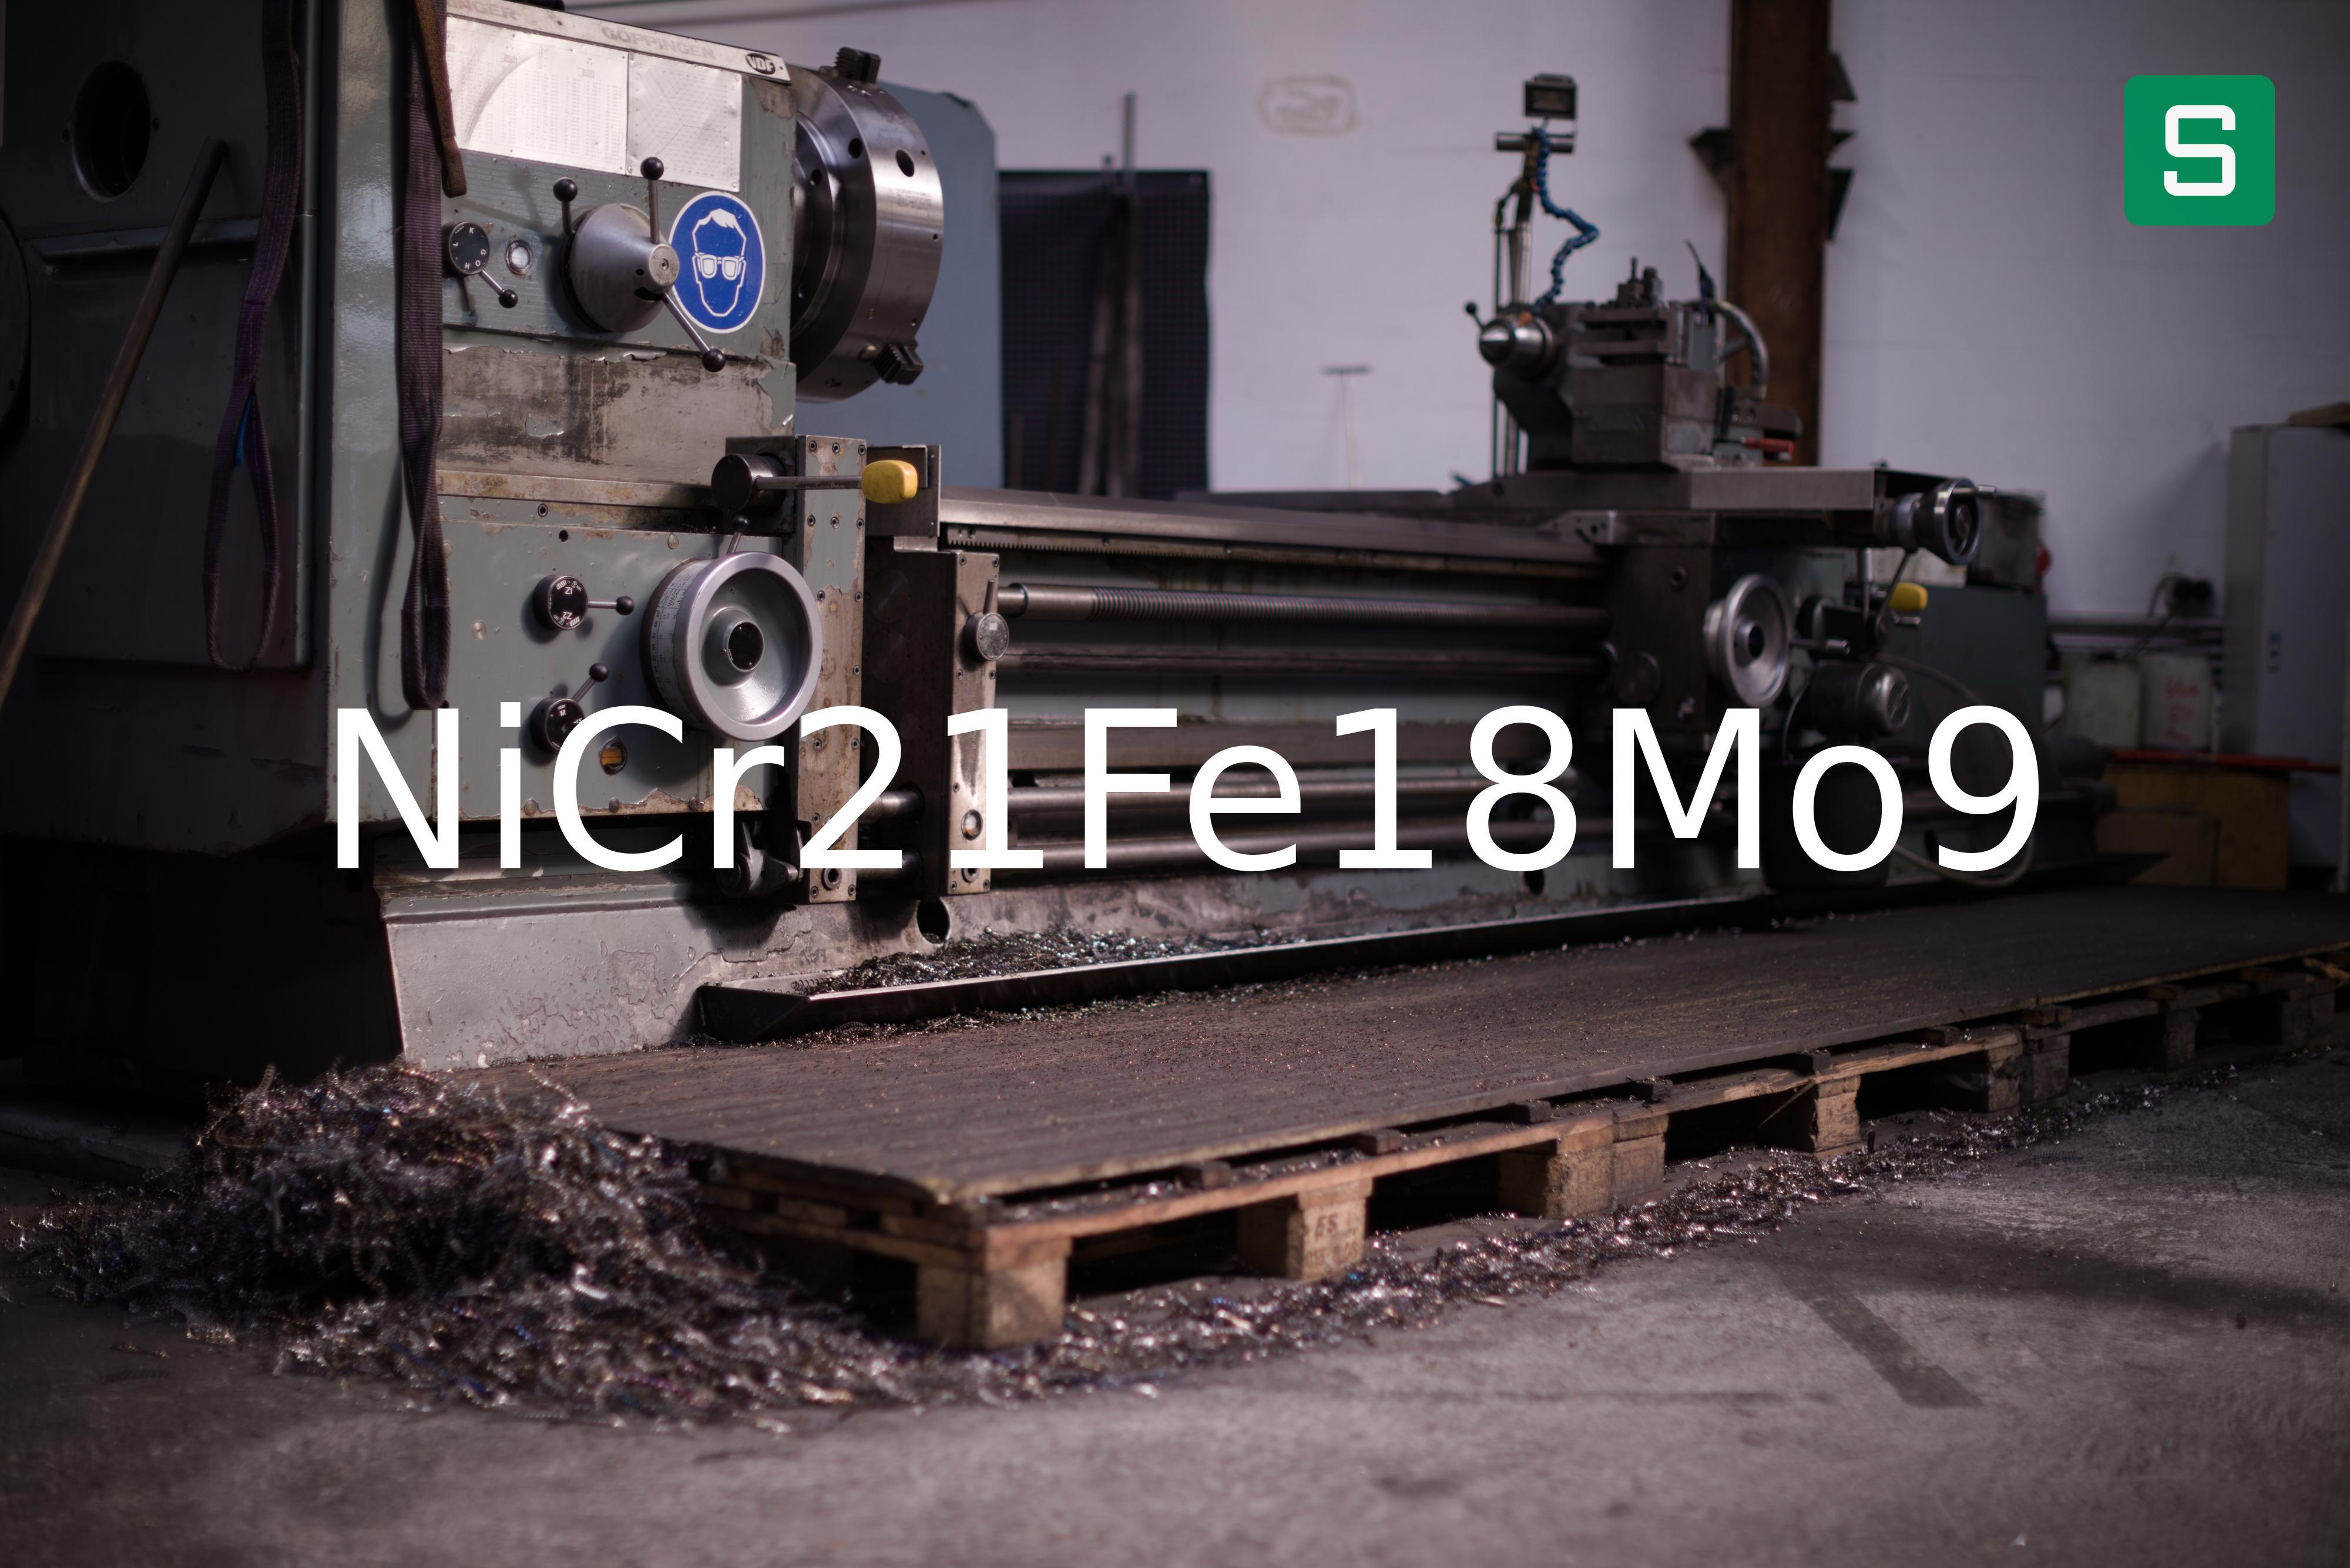 Steel Material: NiCr21Fe18Mo9